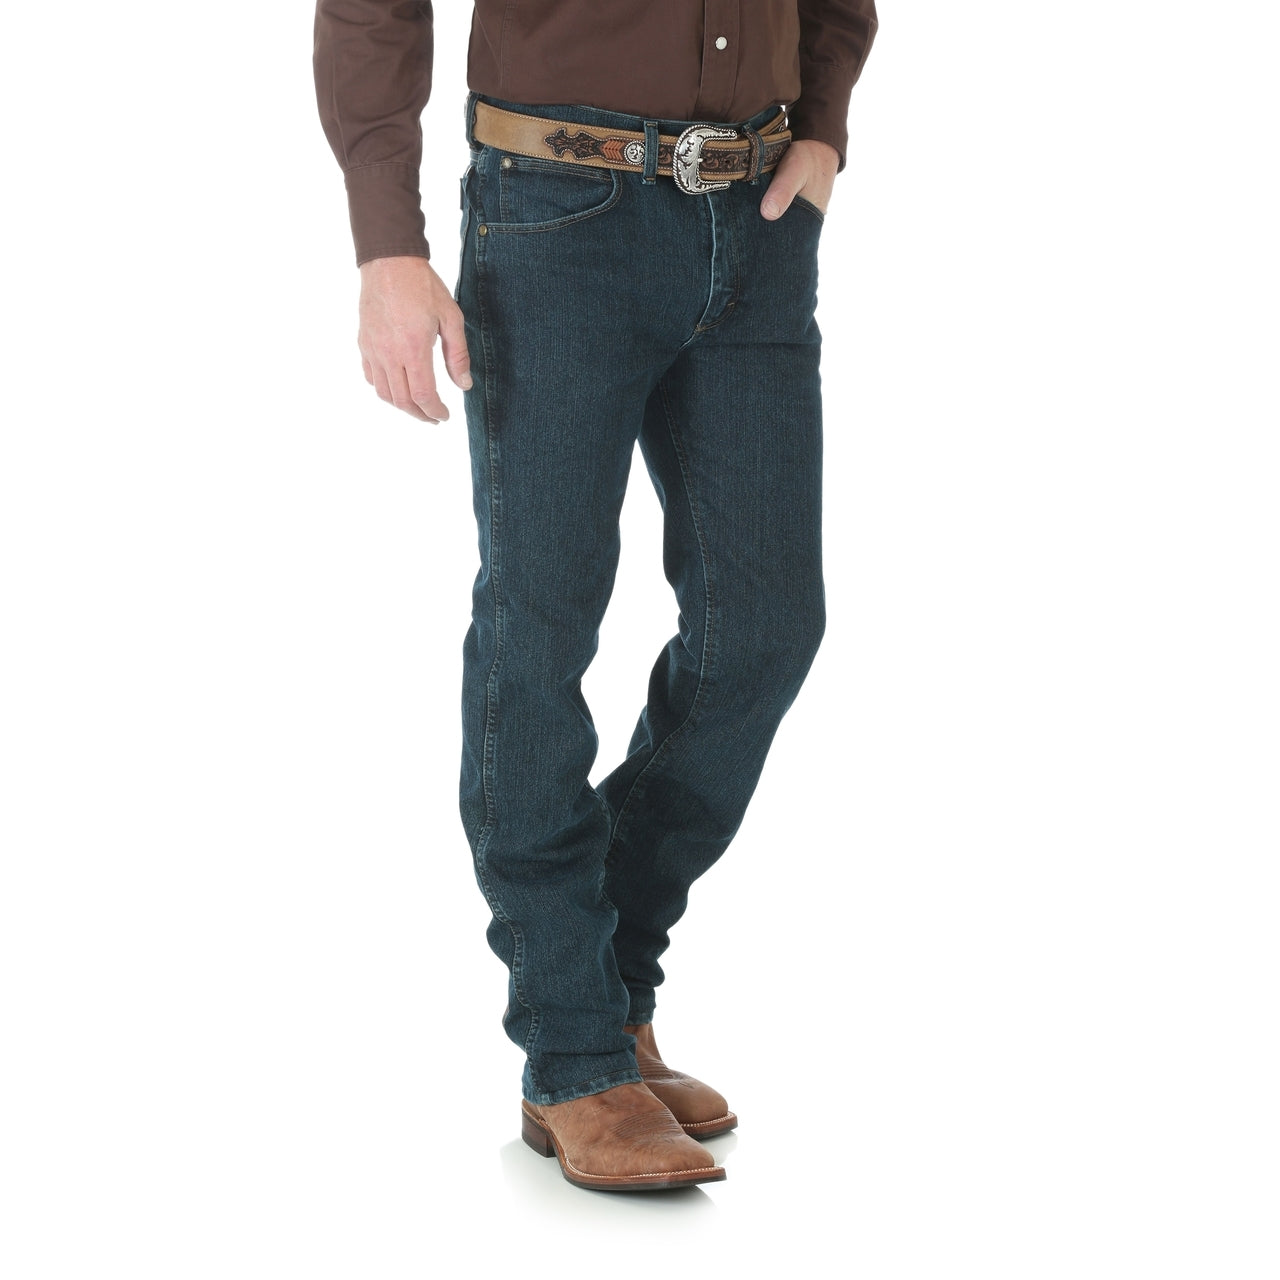 Wrangler Performance Advanced Comfort Cowboy Cut Slim Fit Jeans